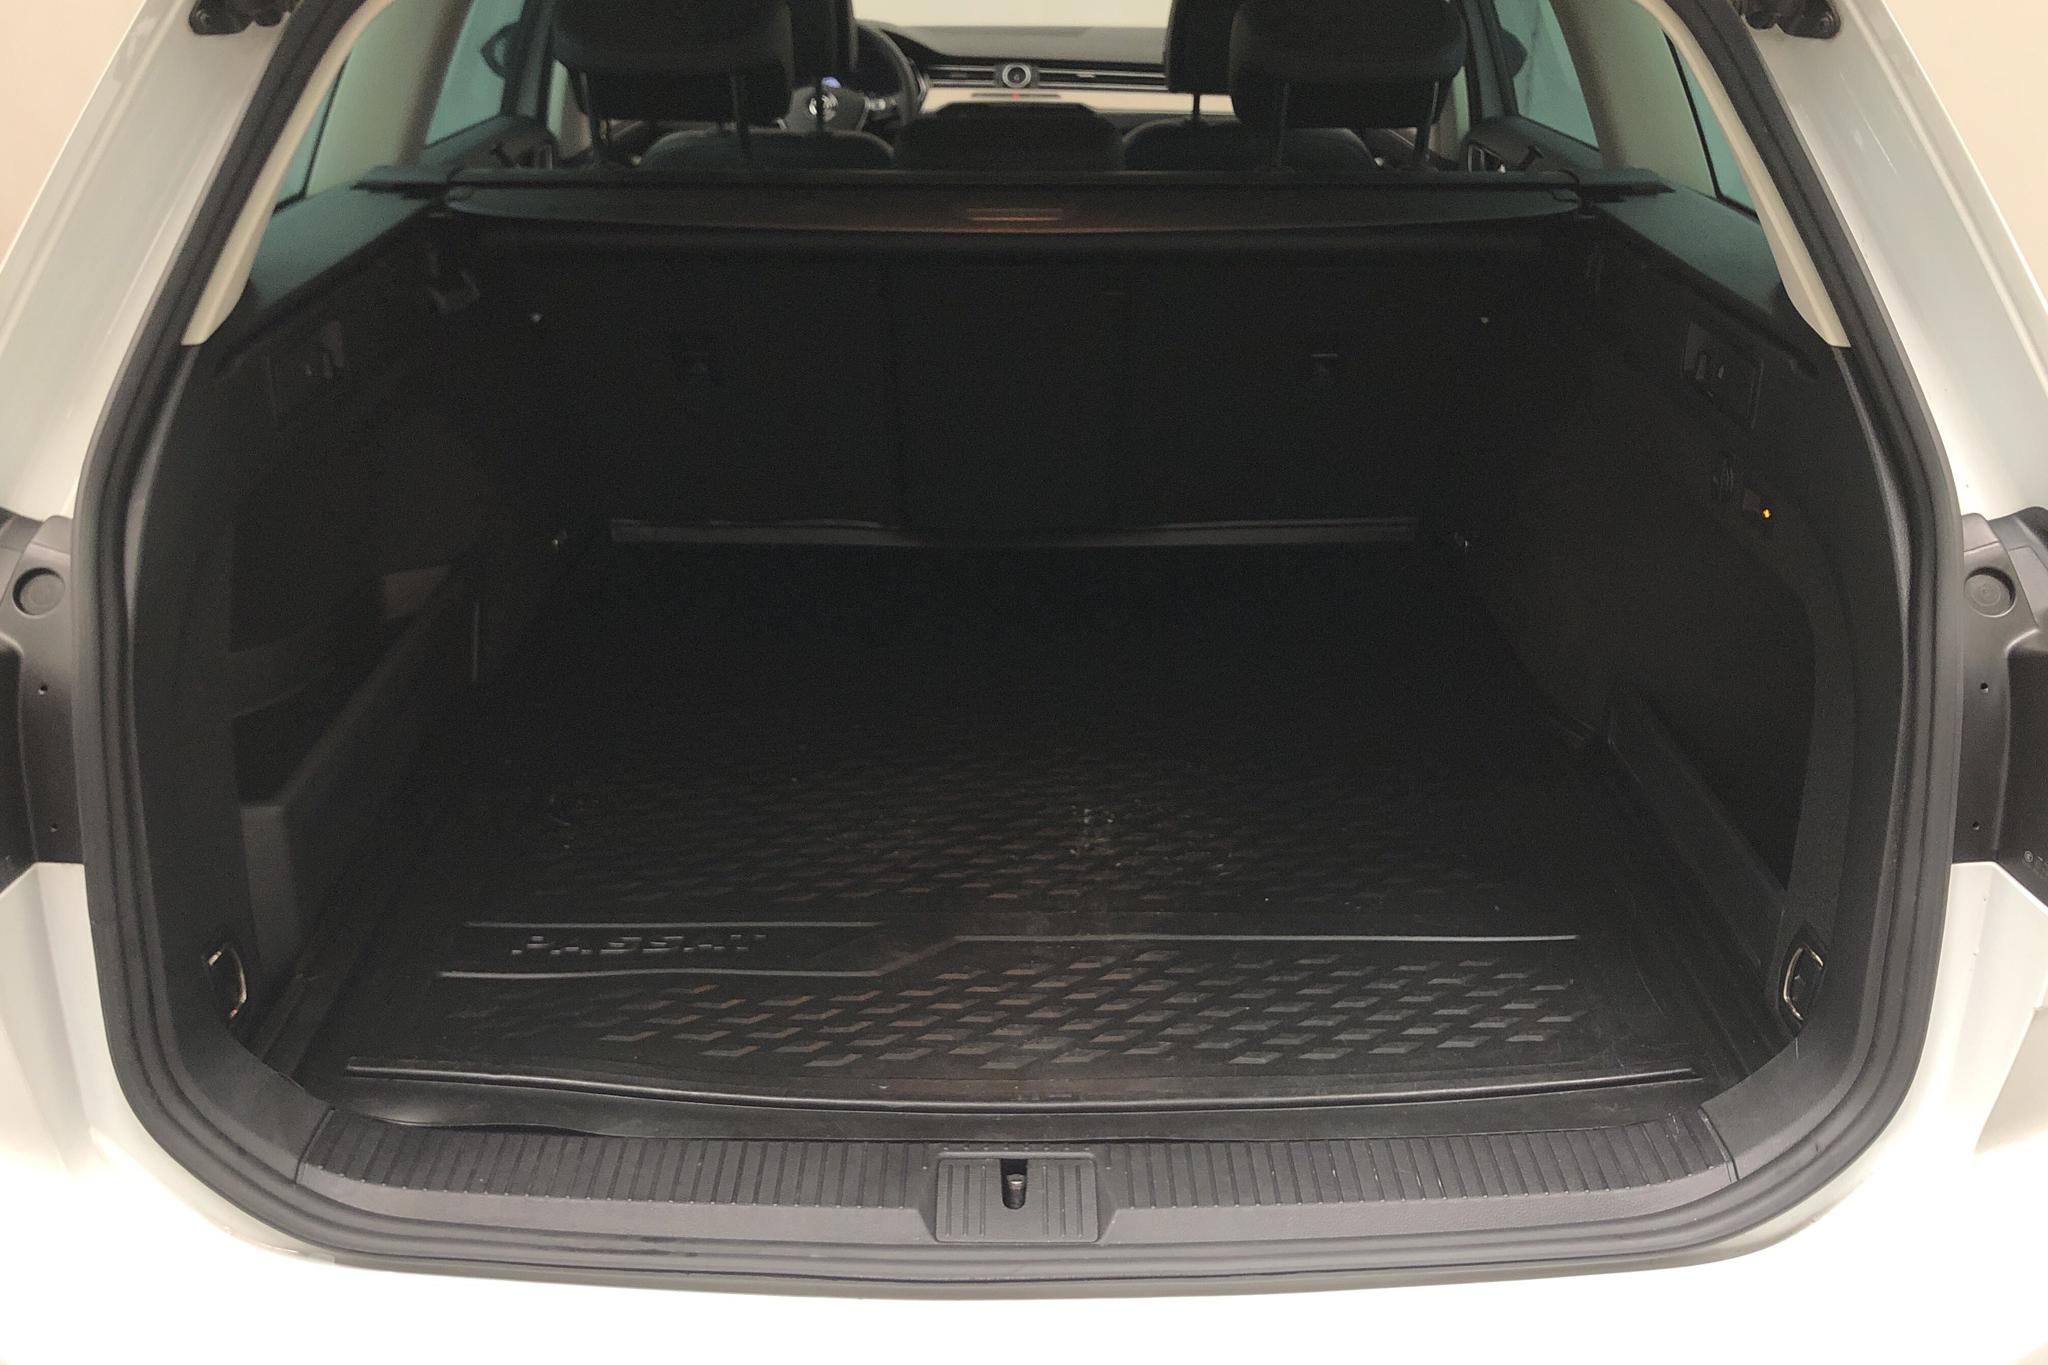 VW Passat Alltrack 2.0 TDI Sportscombi 4MOTION (190hk) - 3 980 mil - Automat - vit - 2019